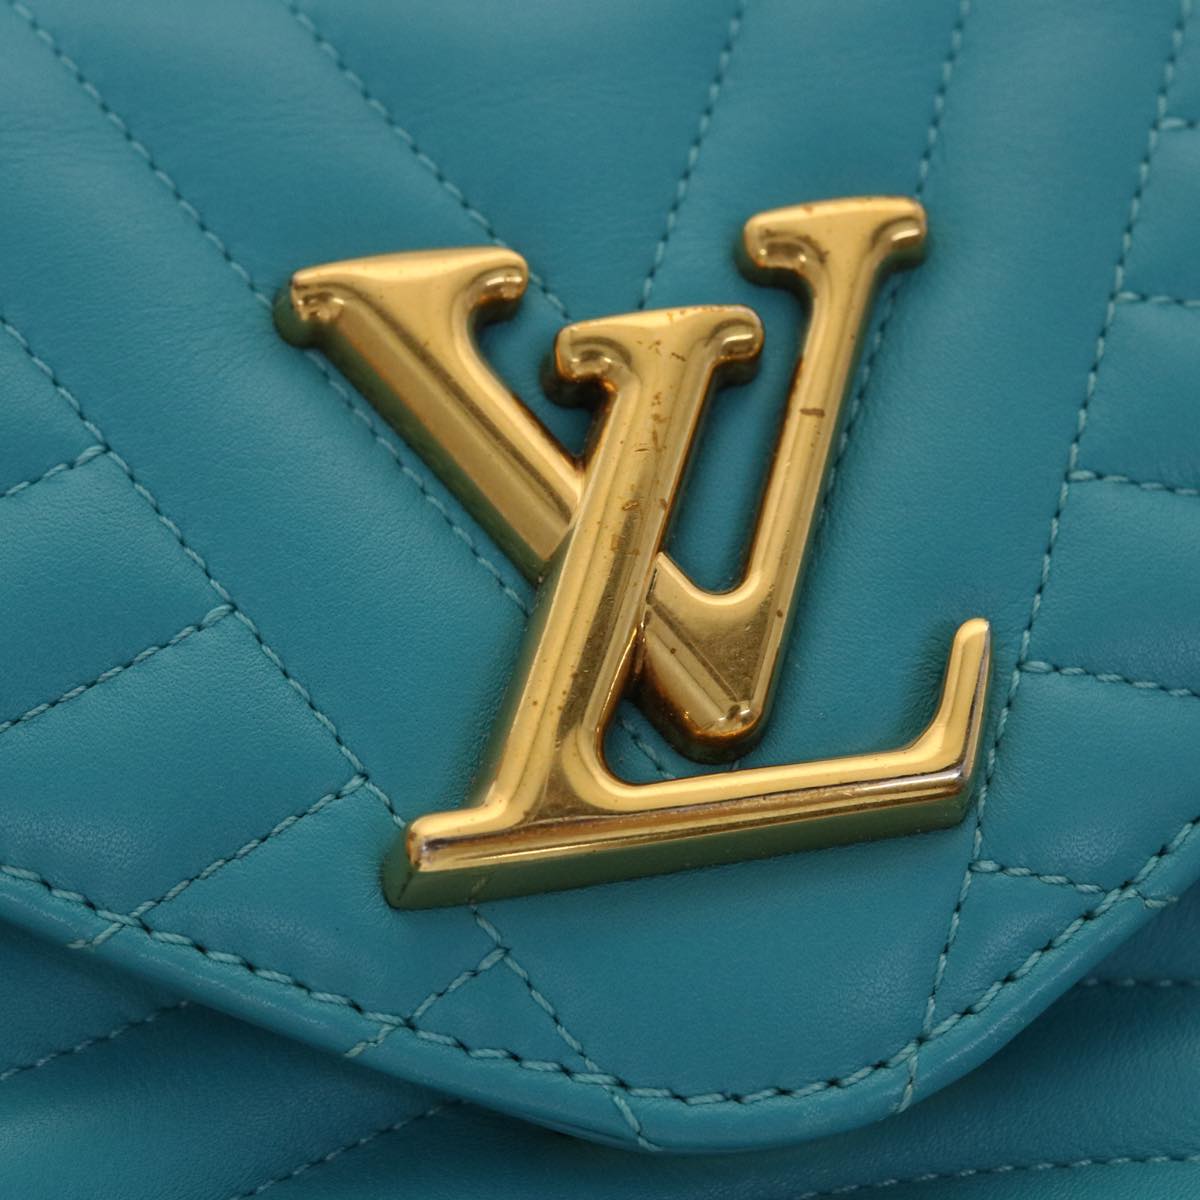 LOUIS VUITTON New Wave Chain Bag PM Bag Turquoise Blue M51936 LV Auth 47934A